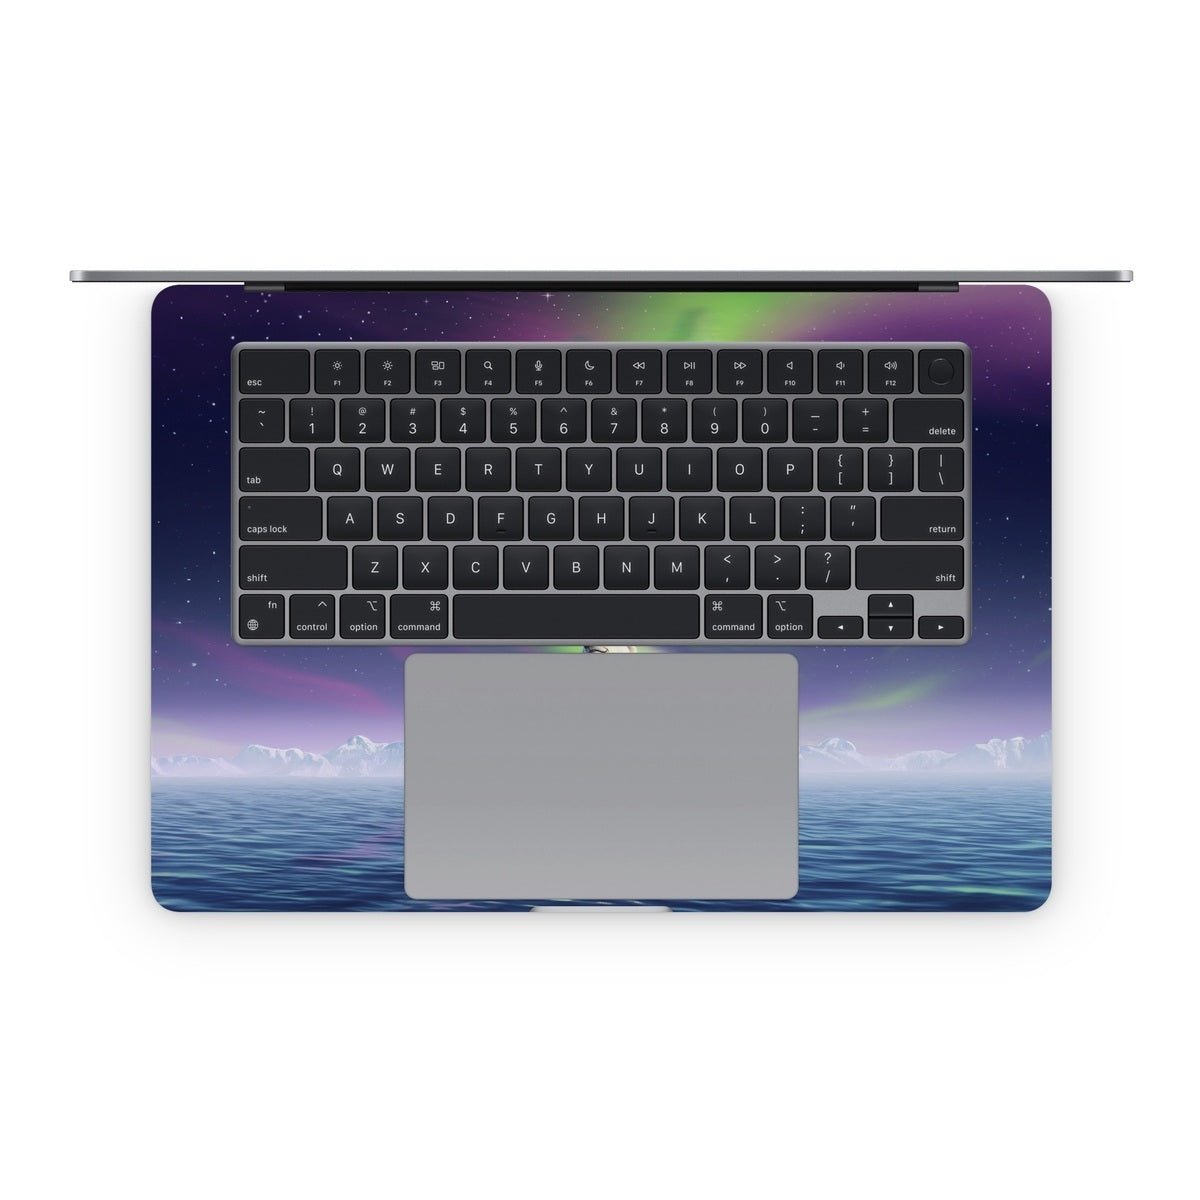 Arctic Kiss - Apple MacBook Skin - Jerry LoFaro - DecalGirl